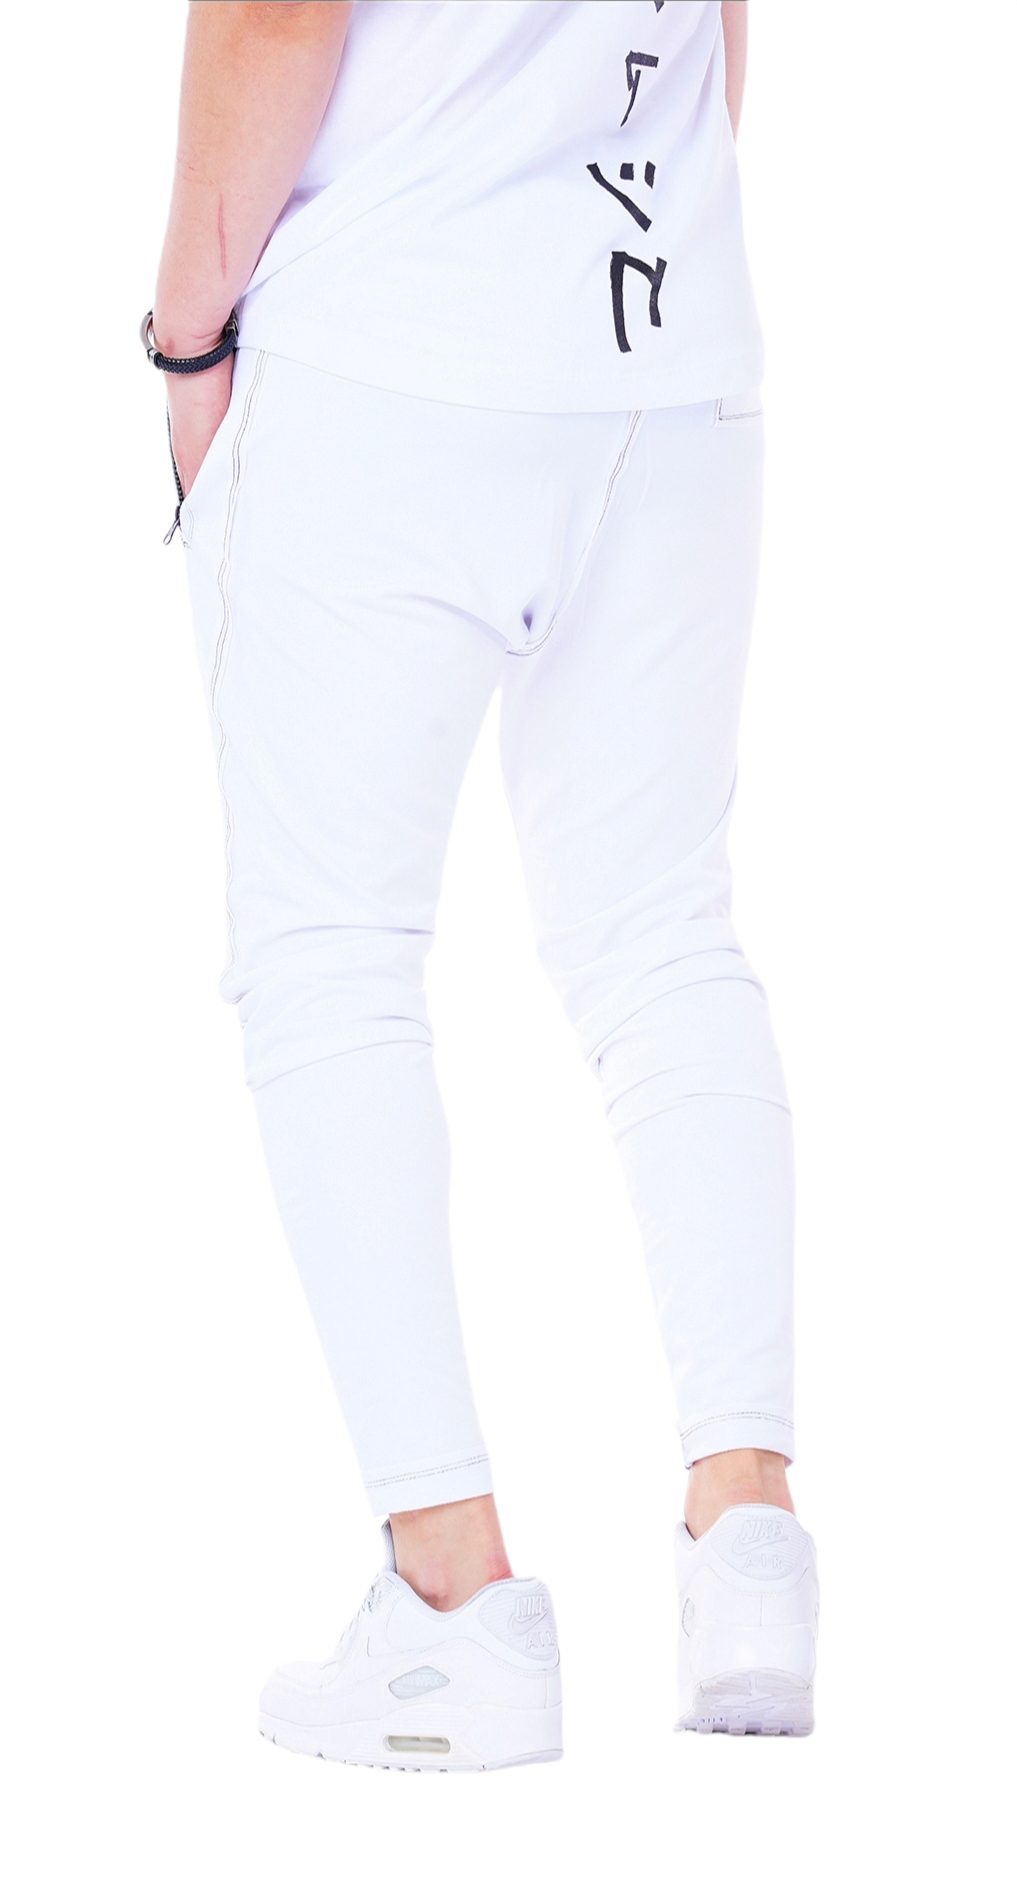 Pantaloni crossed over cut - White edition MPL5420